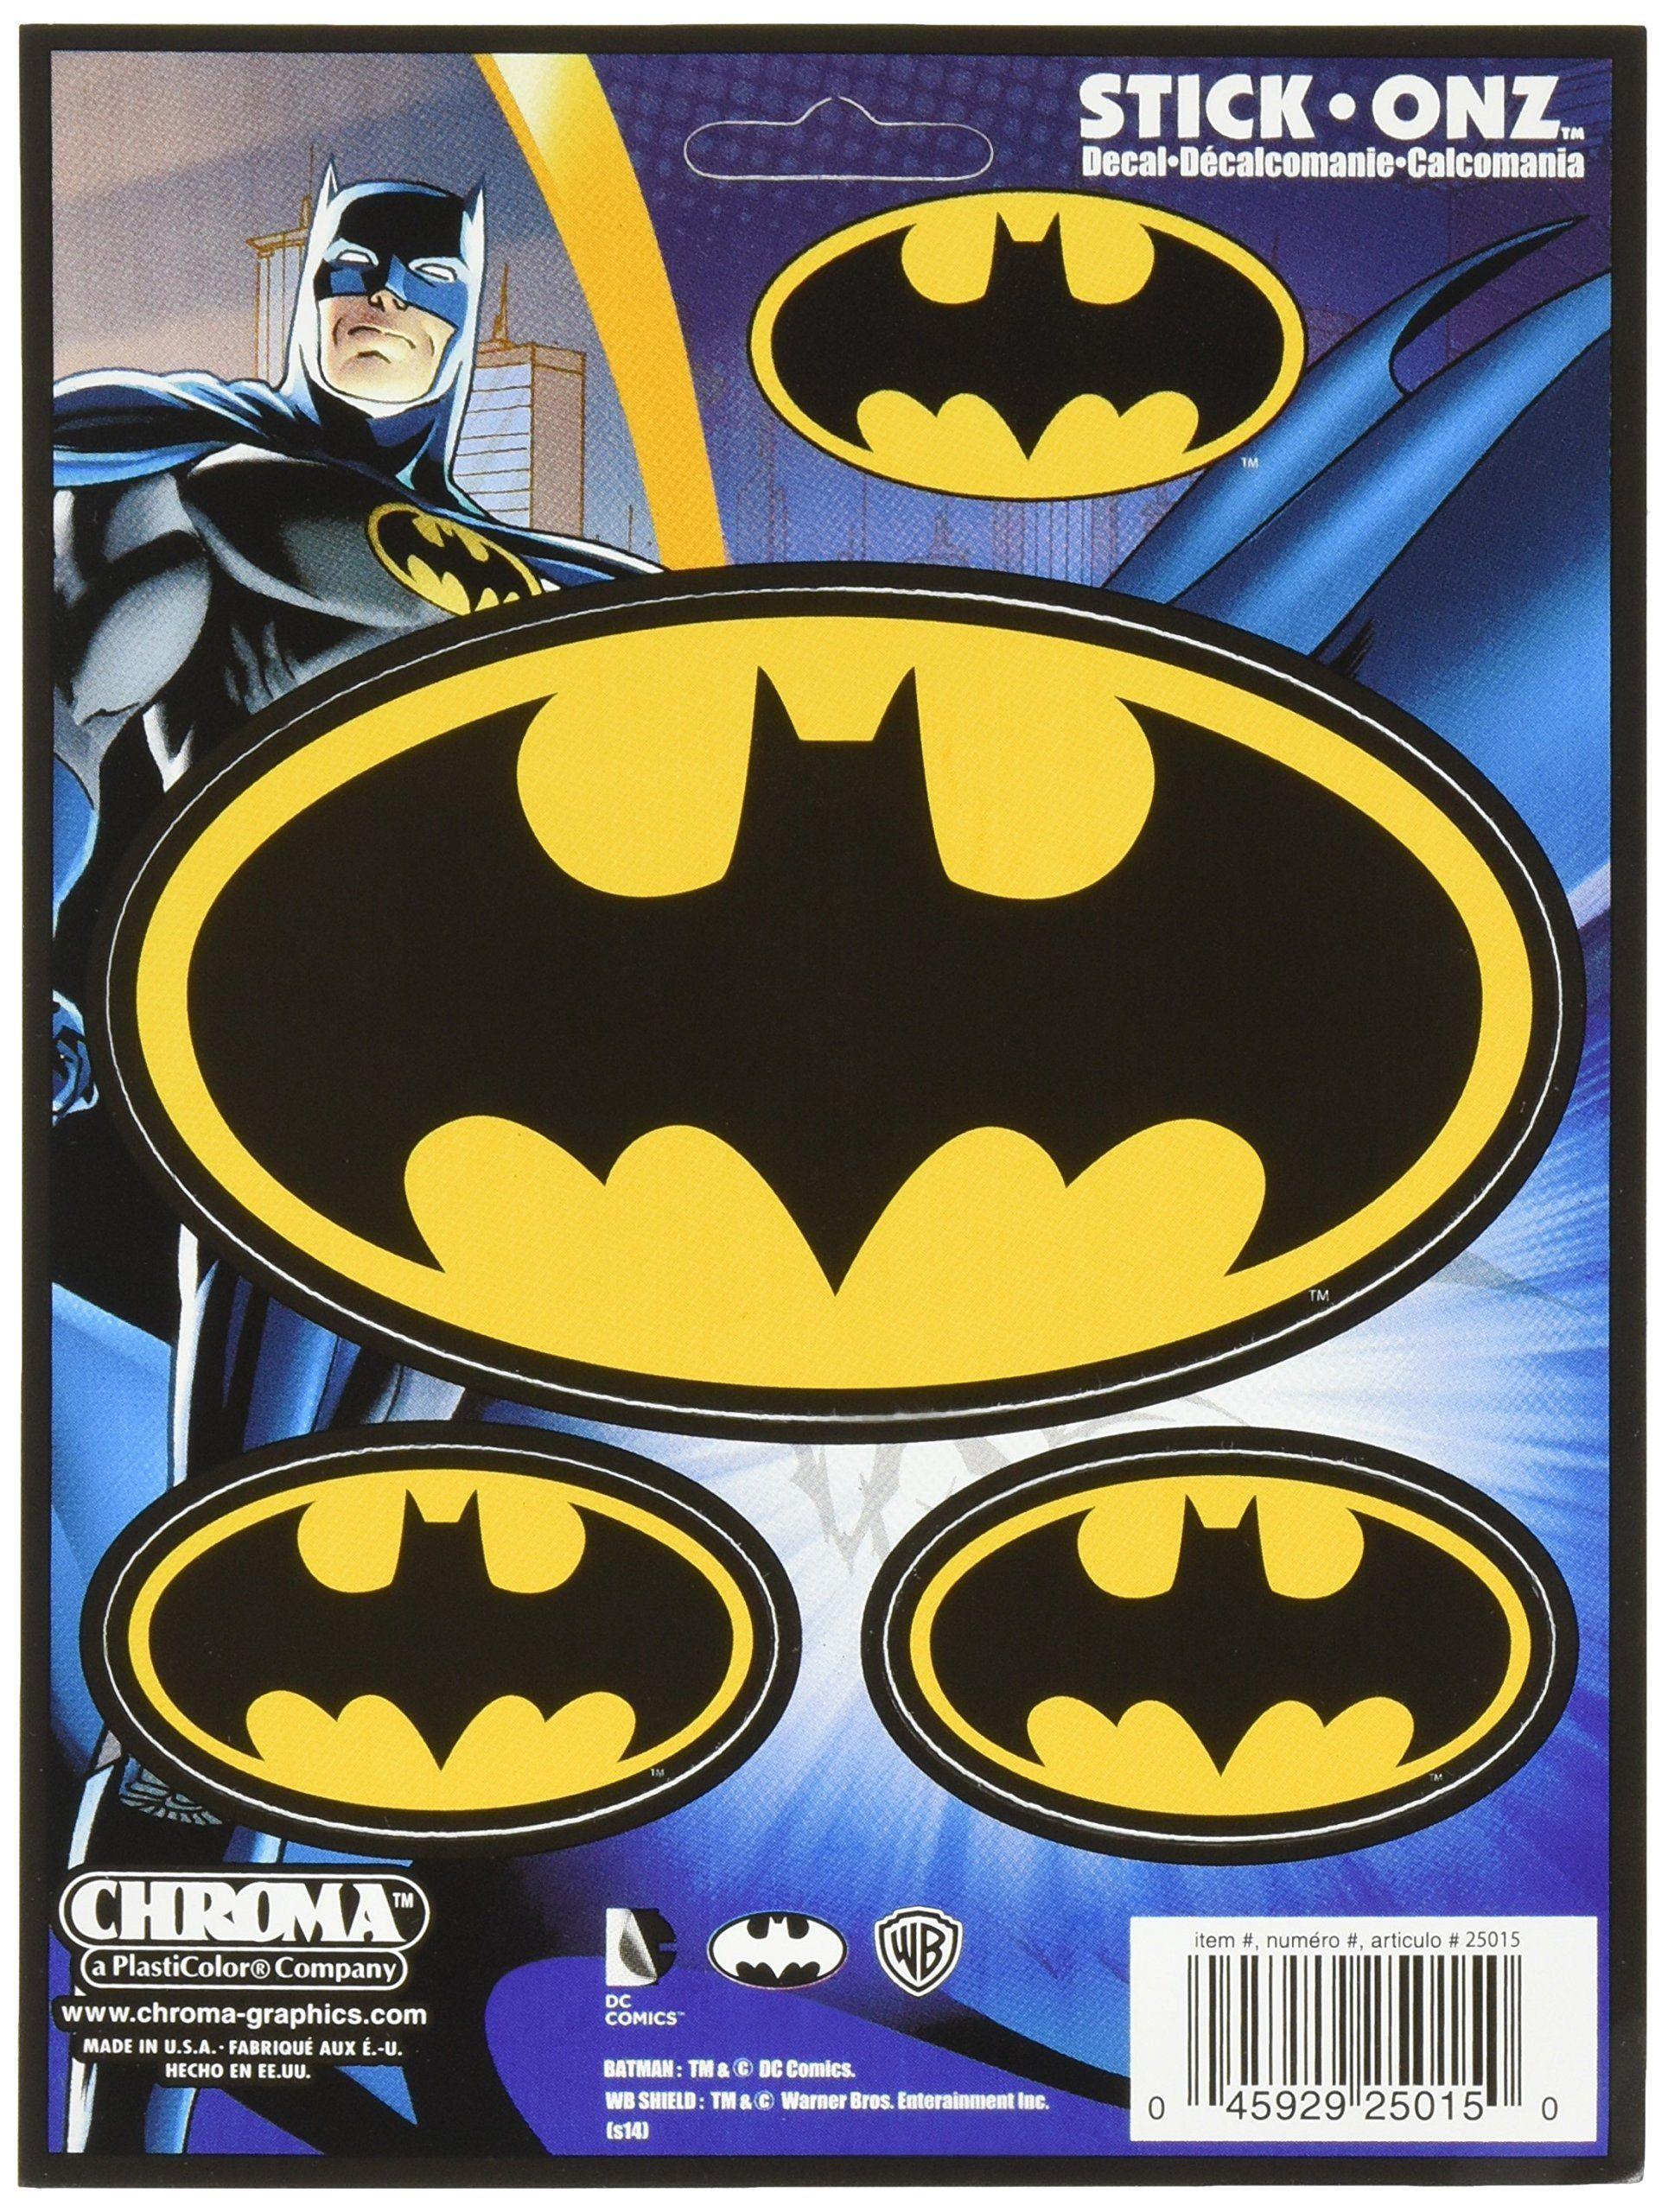 Gold and Black Batman Logo - Chroma Black and Gold 25015 Batman Logo 3pc Stick Onz